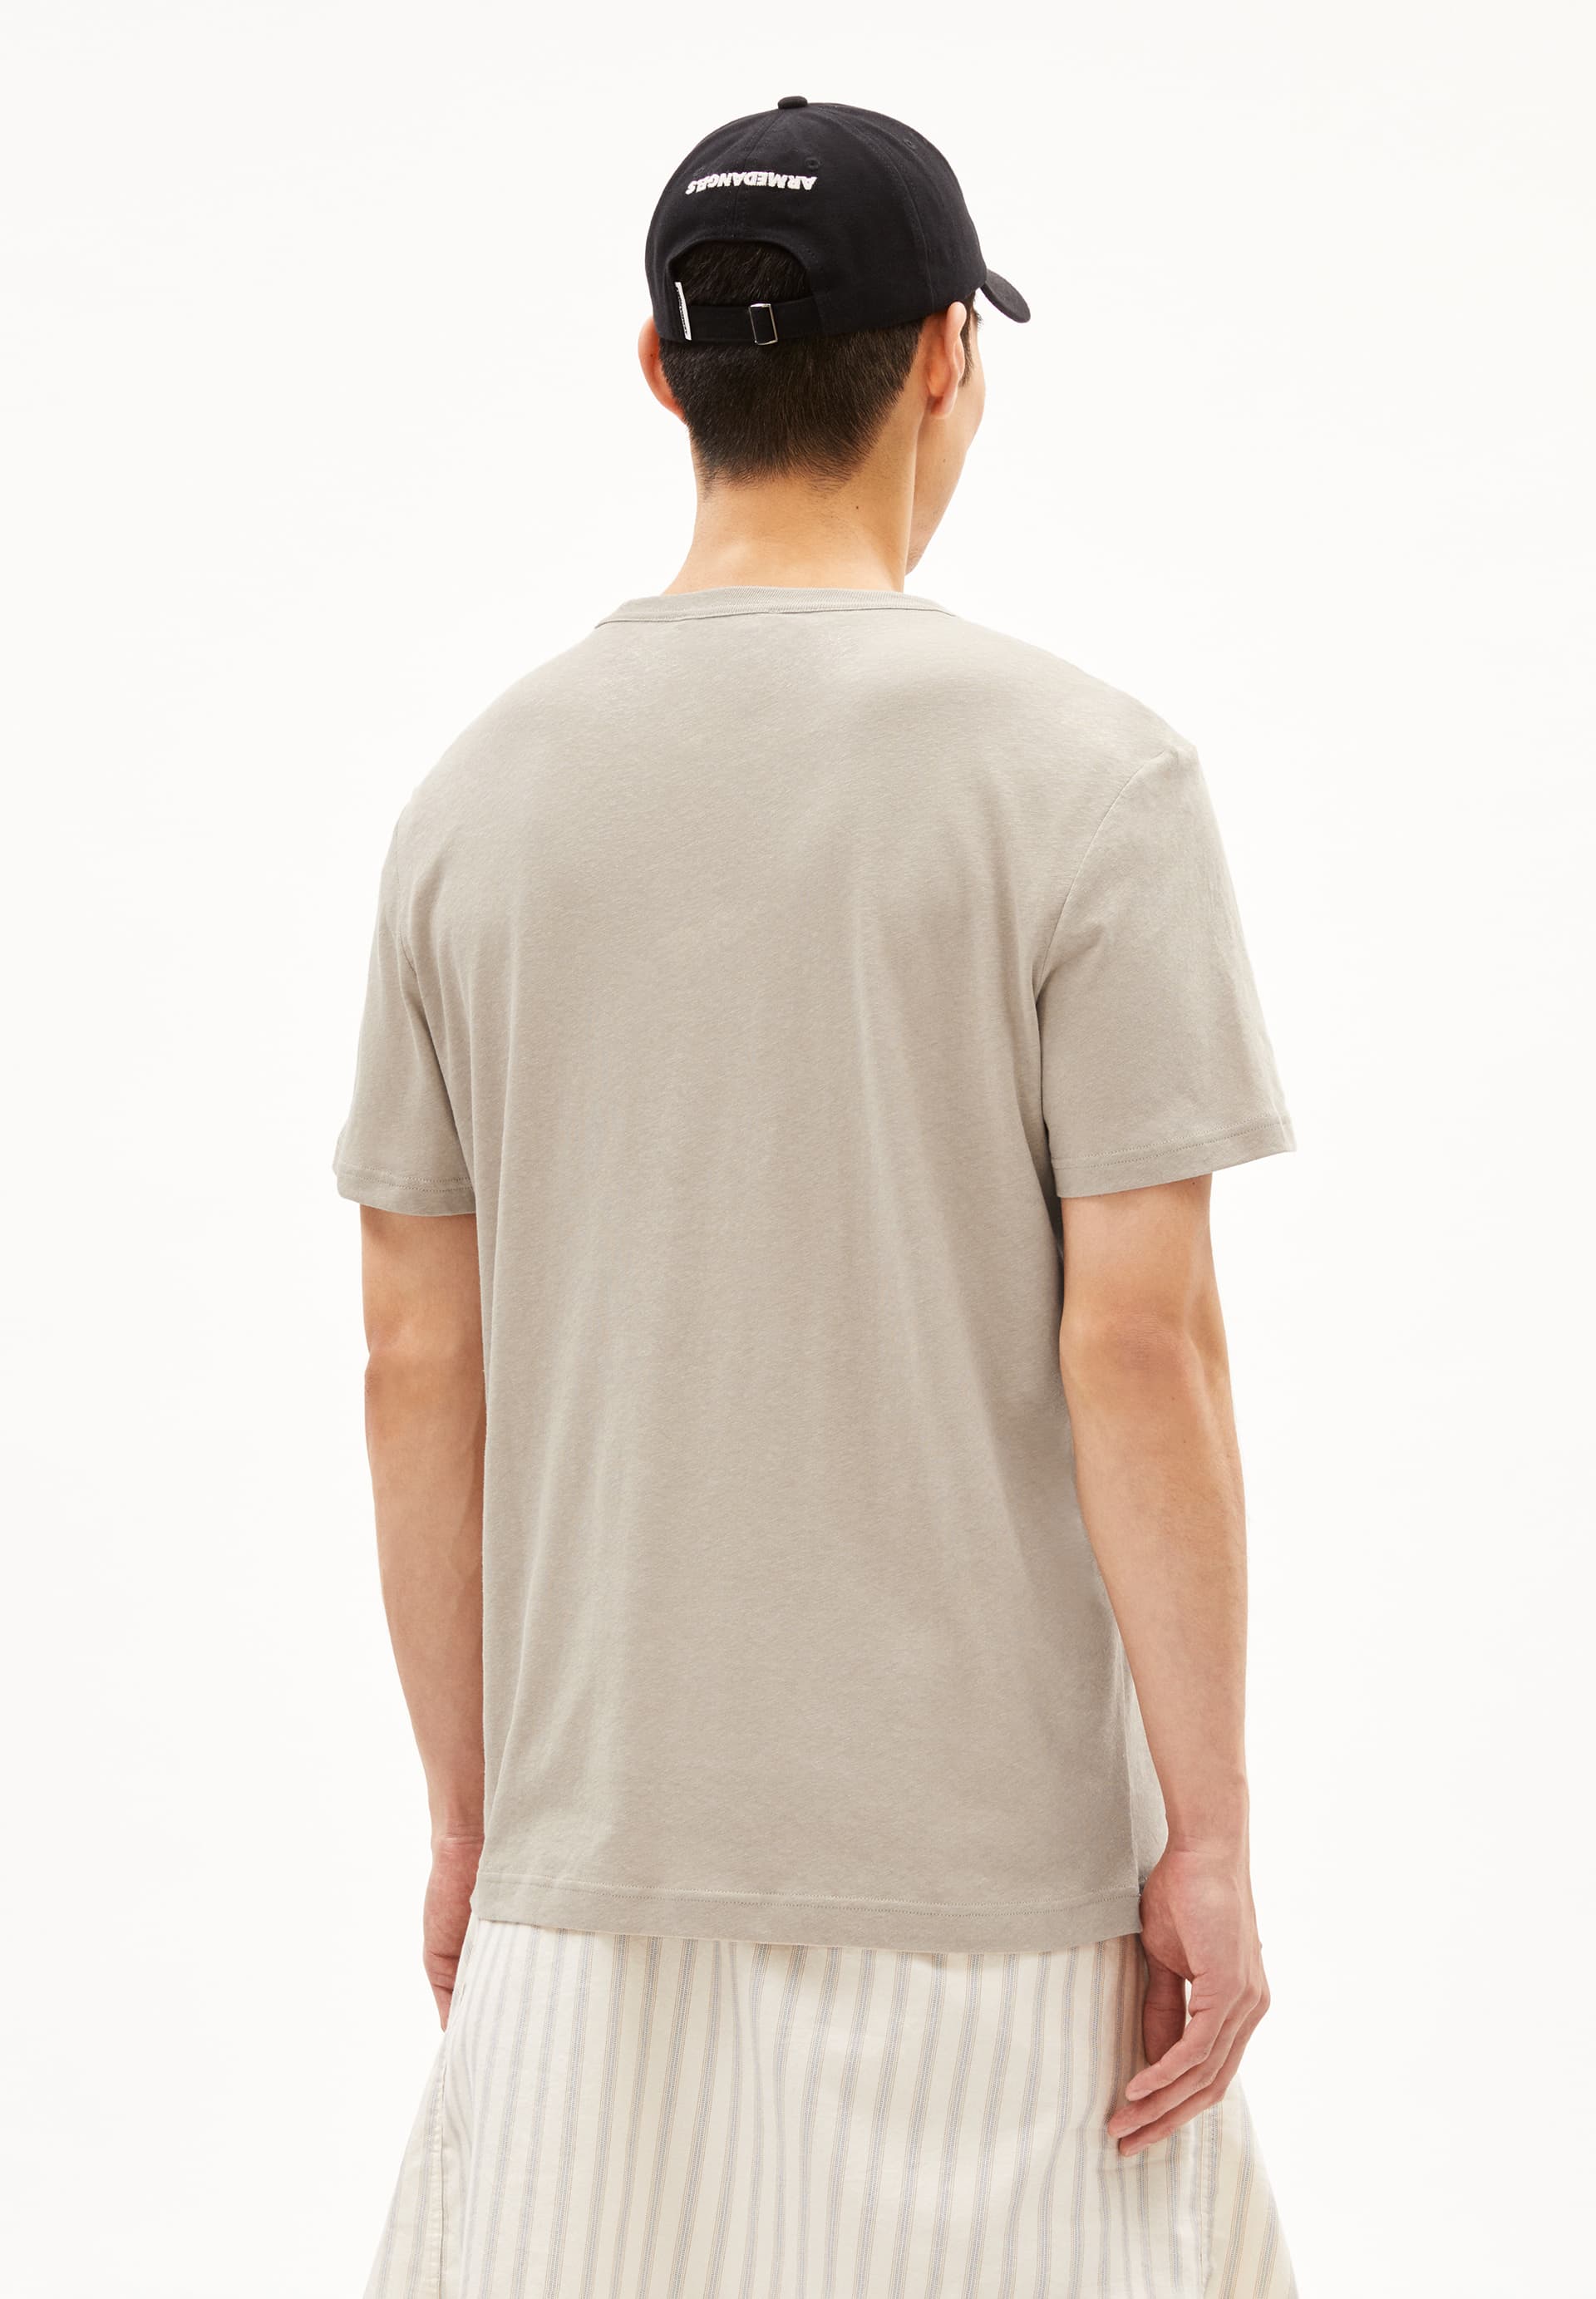 KOLMAARO LINEN T-shirt coupe décontractée en lin mélangé